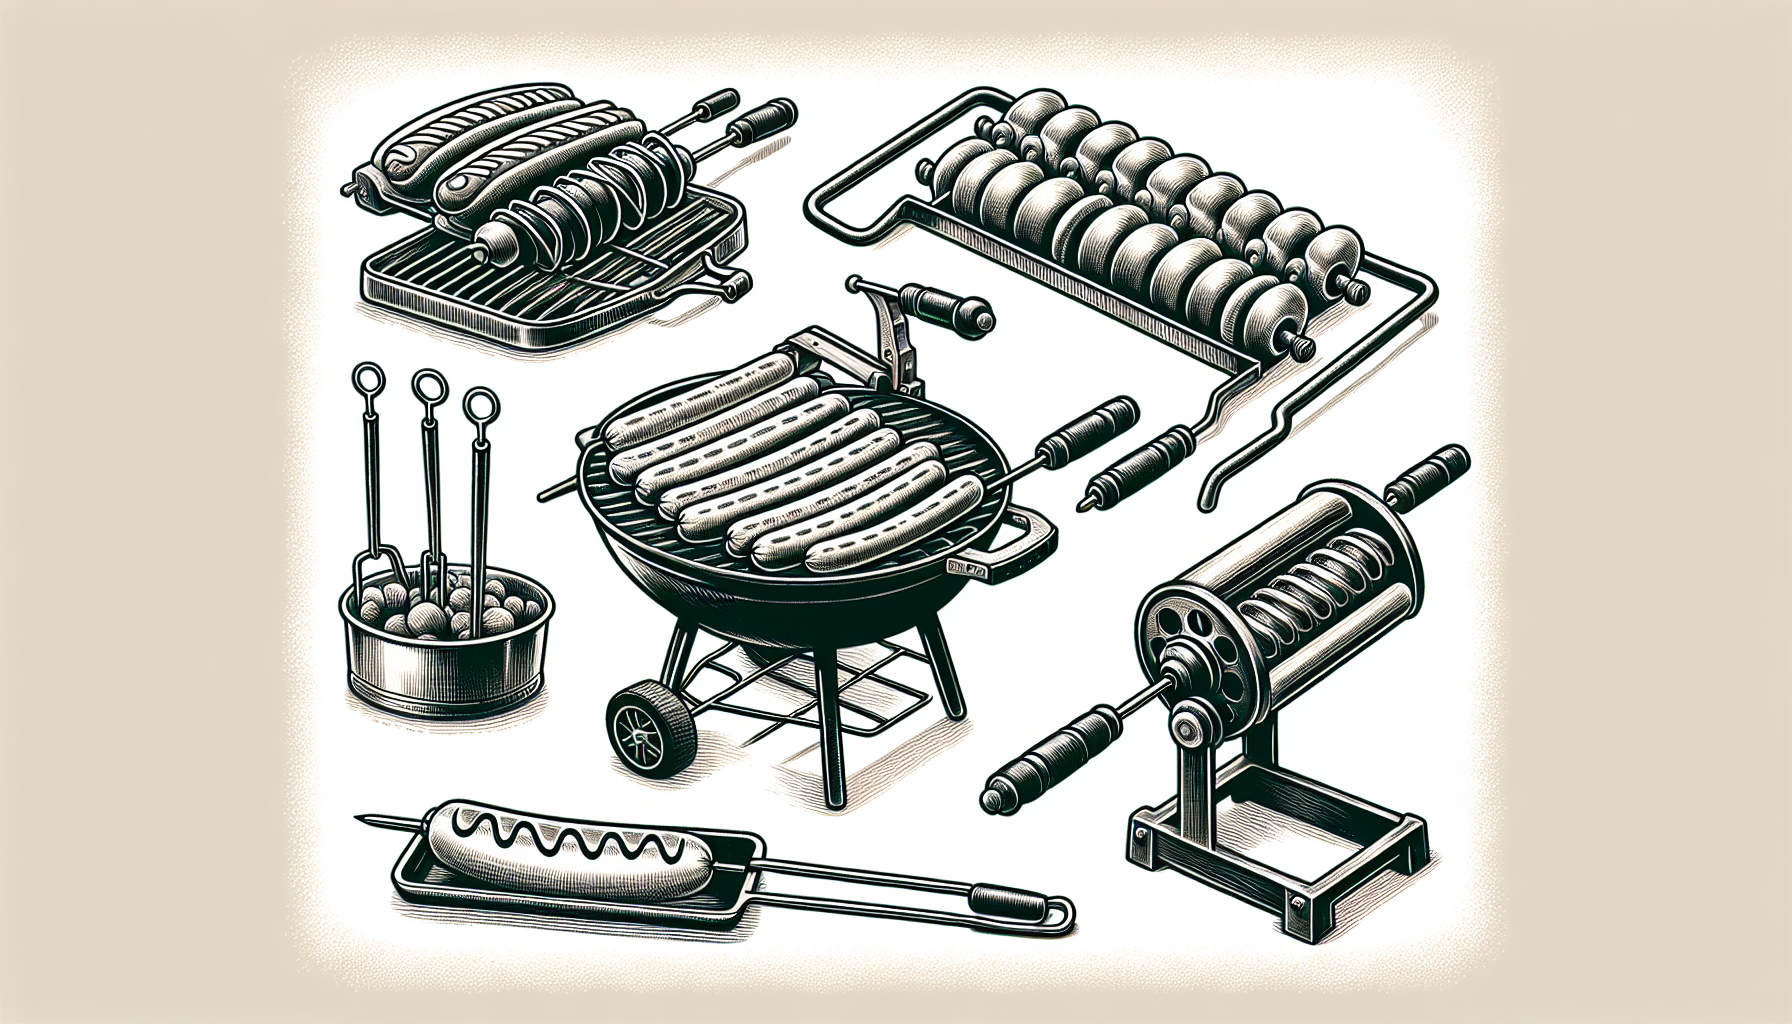 Illustration explaining common hot dog grill terminology